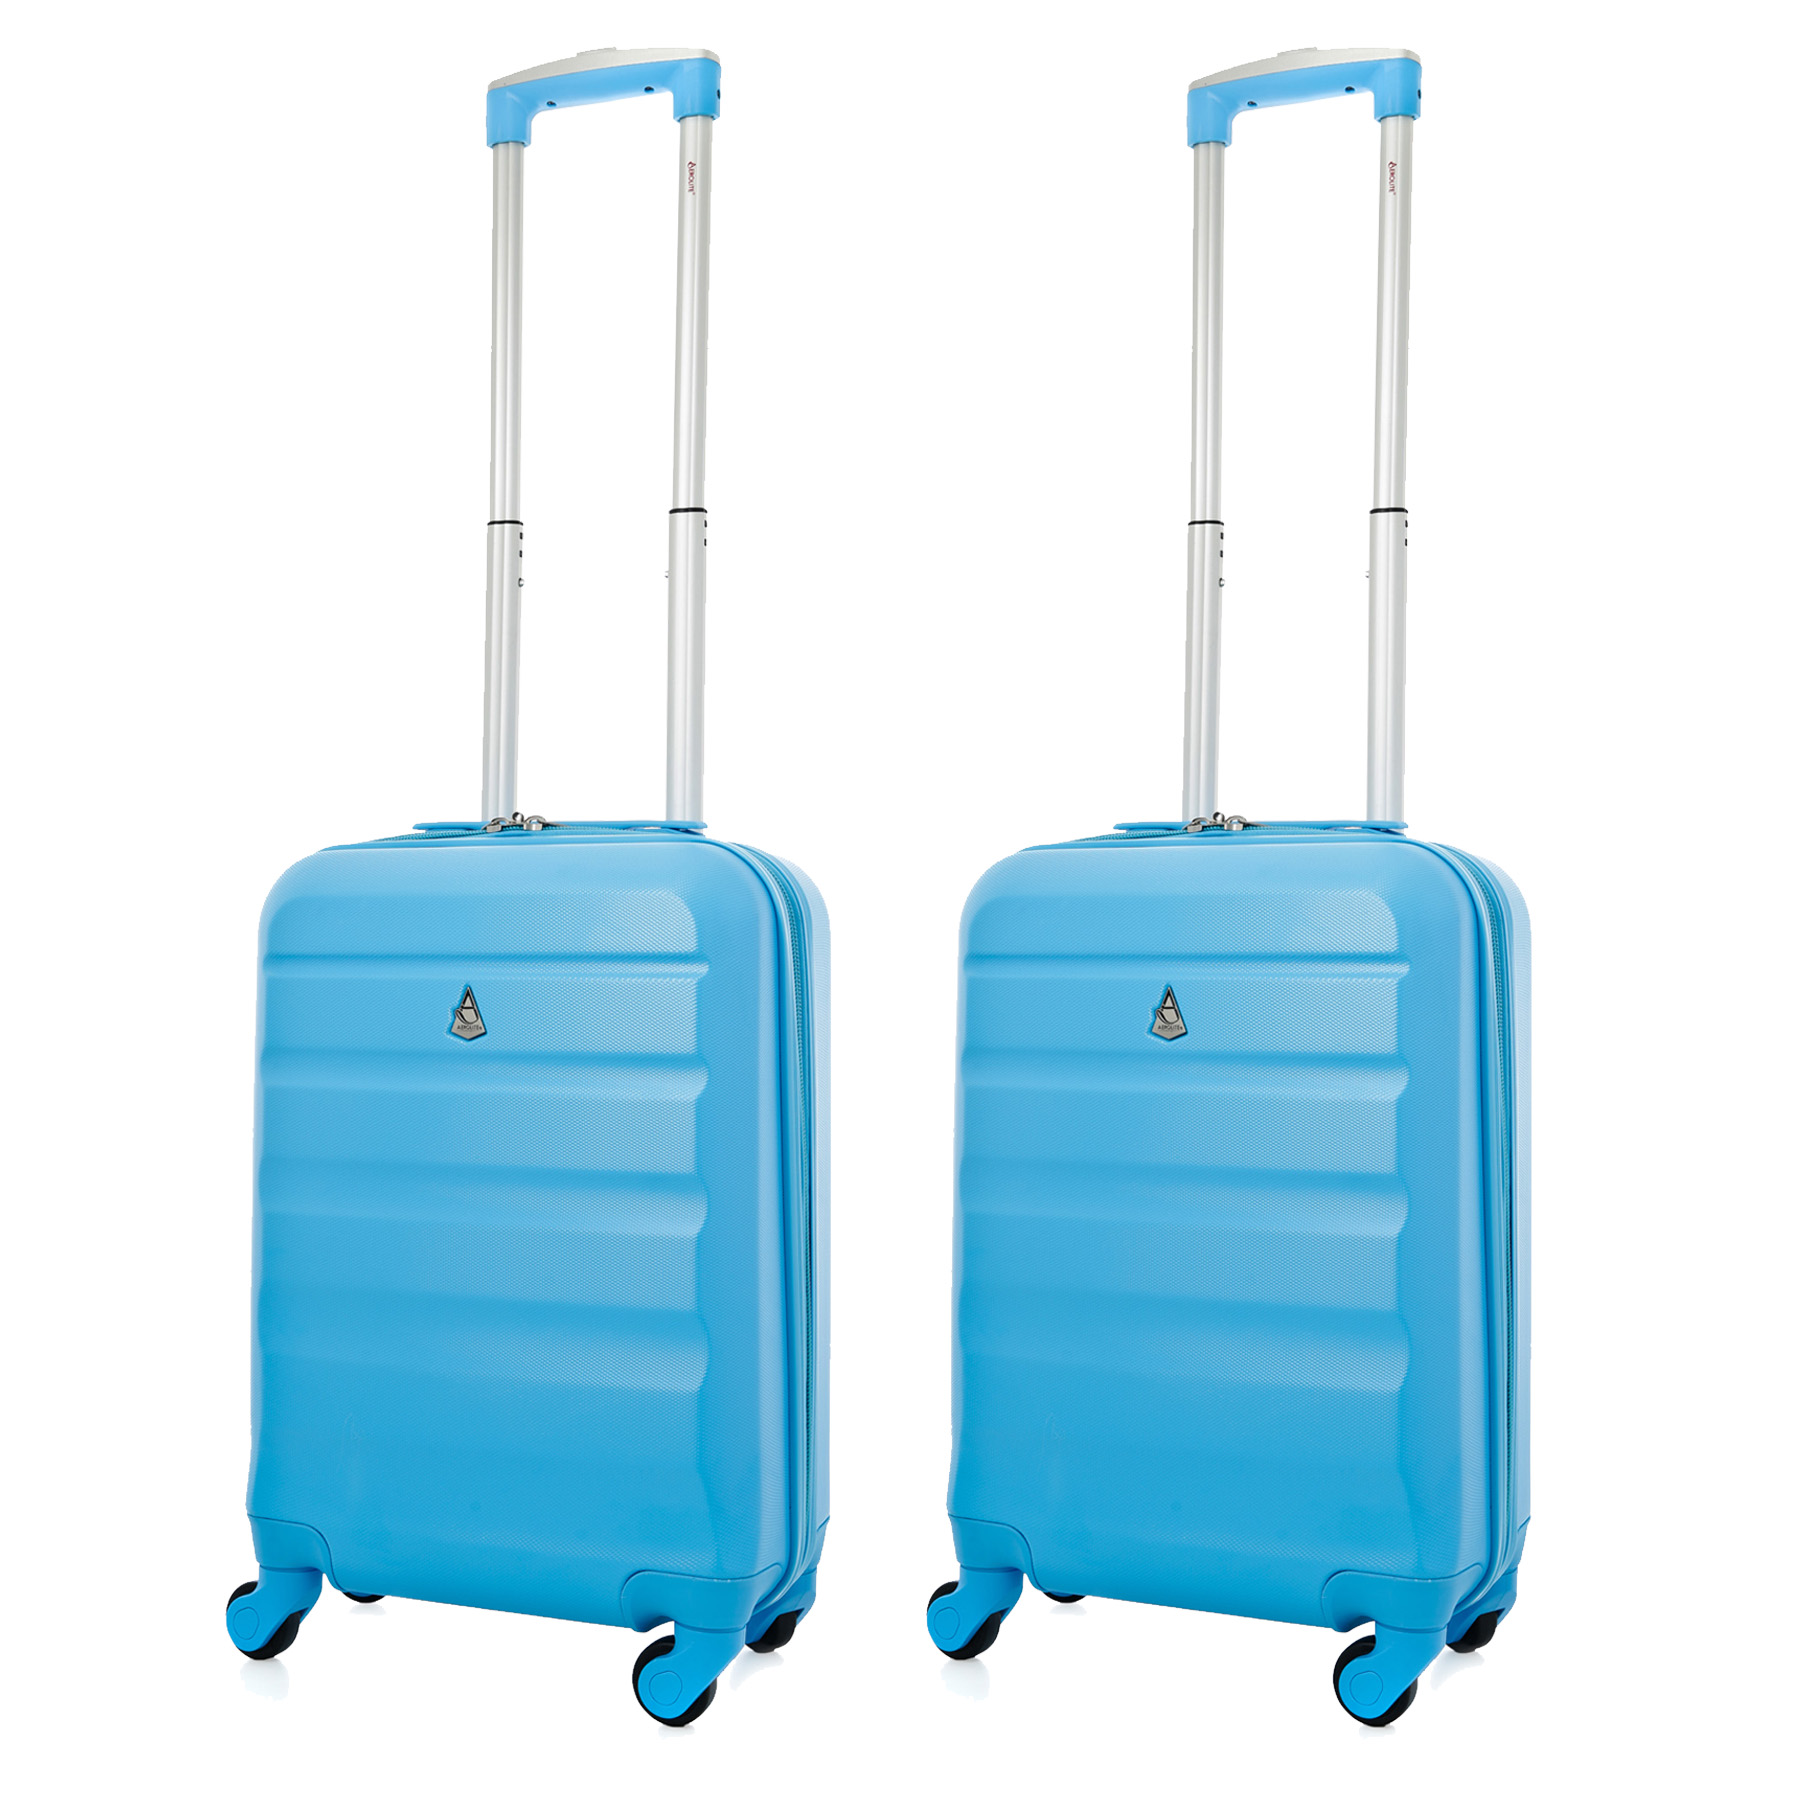 Aerolite Super Lightweight ABS Hard Shell Suitcase - 4 Wheels Set of 2